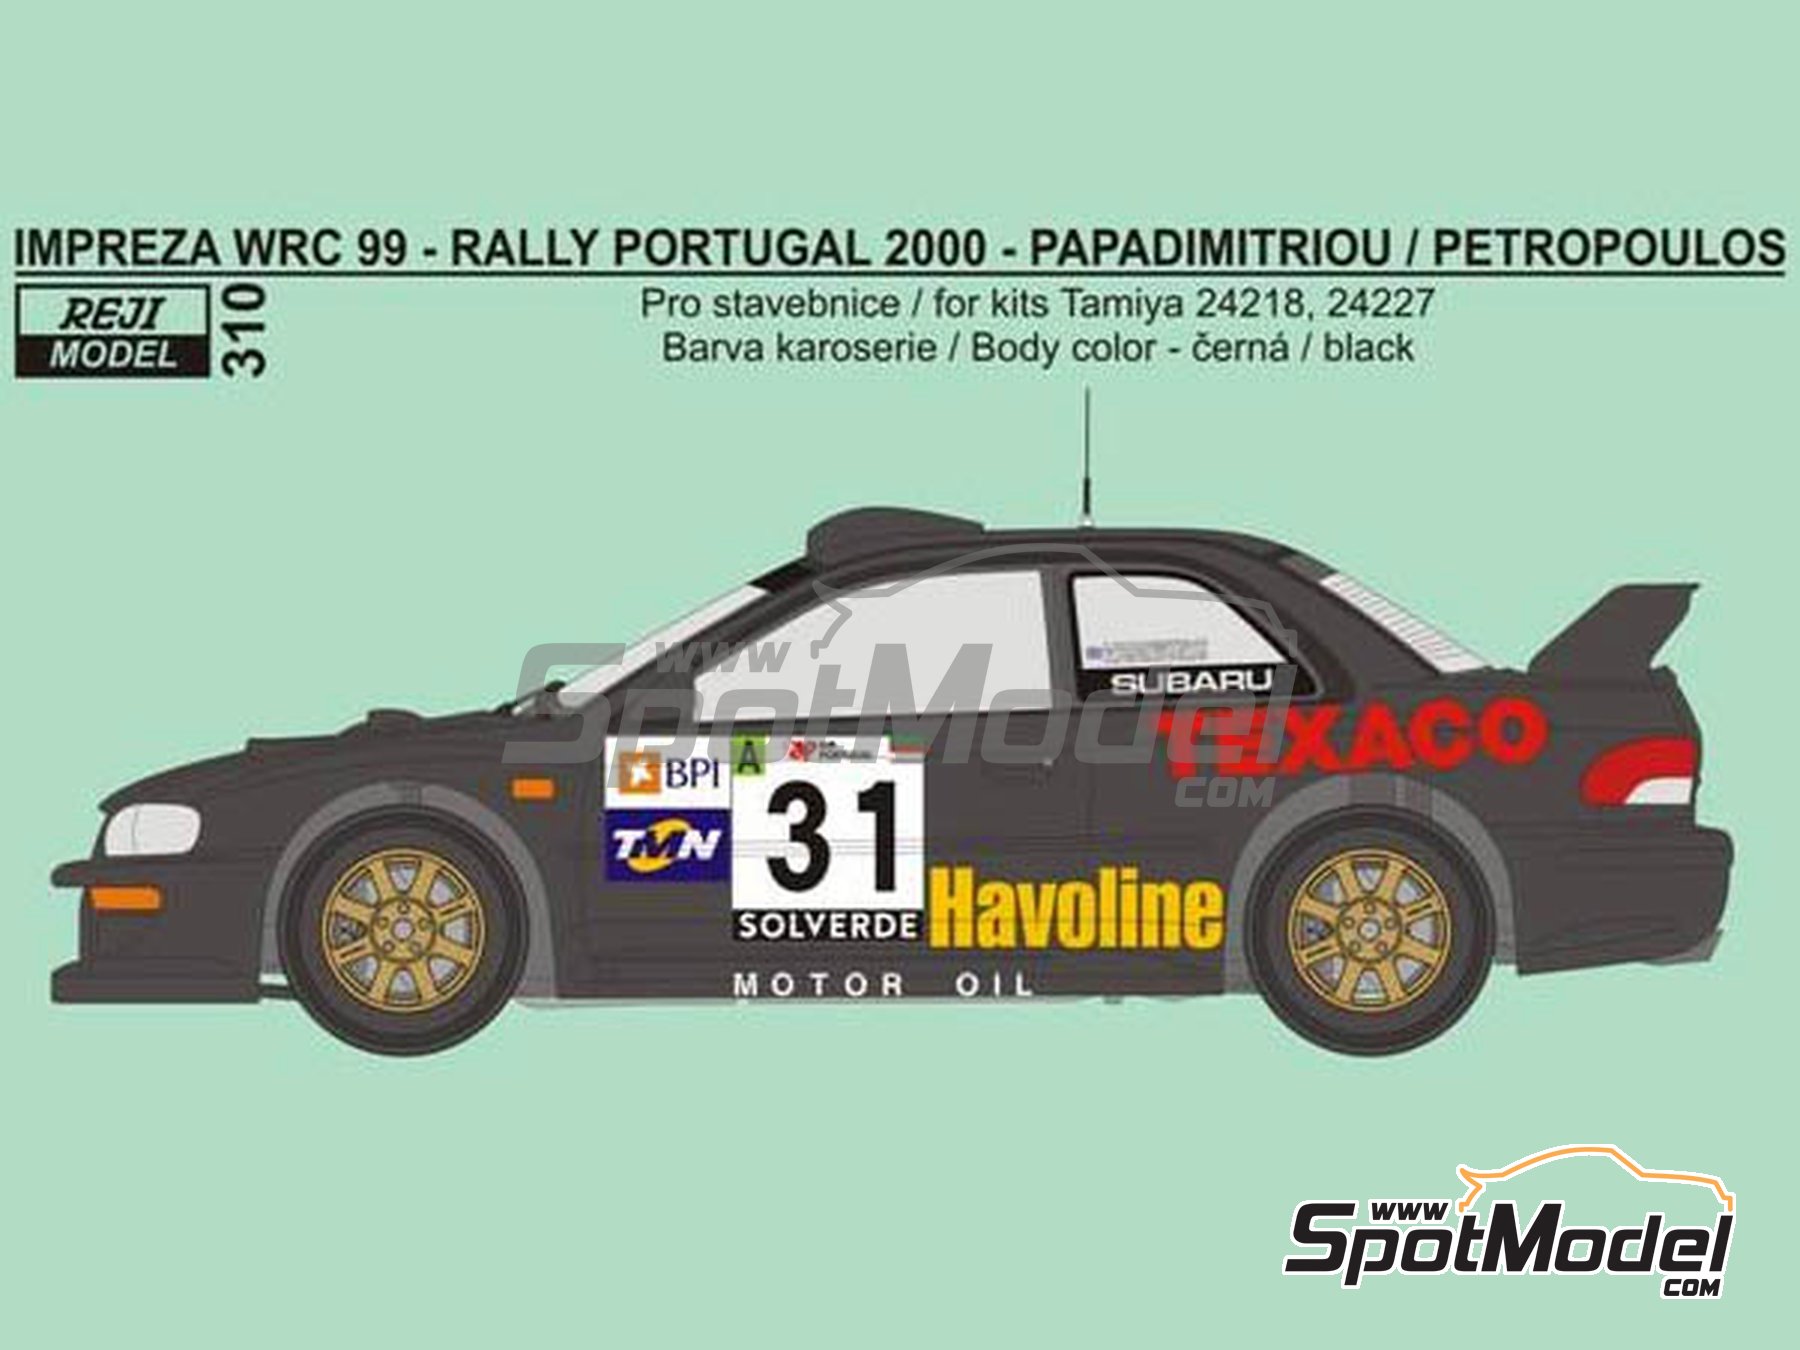 DECALS 1/43 REF 0067 SUBARU IMPREZA WRX MADEIRA RALLYE PORTUGAL 1997 WRC RALLY 